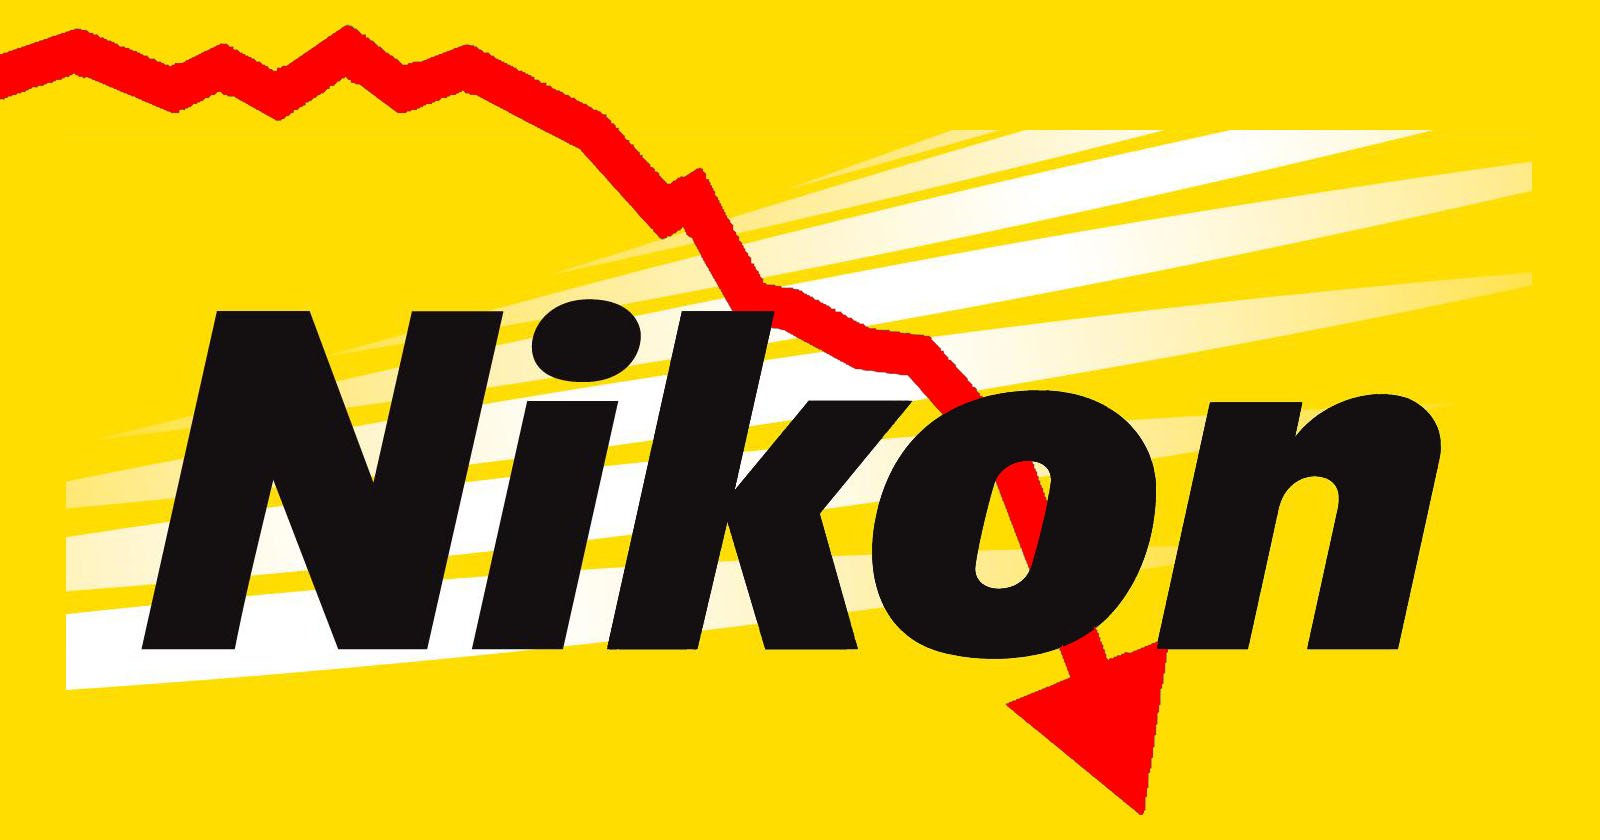 Nikon Stock Chart